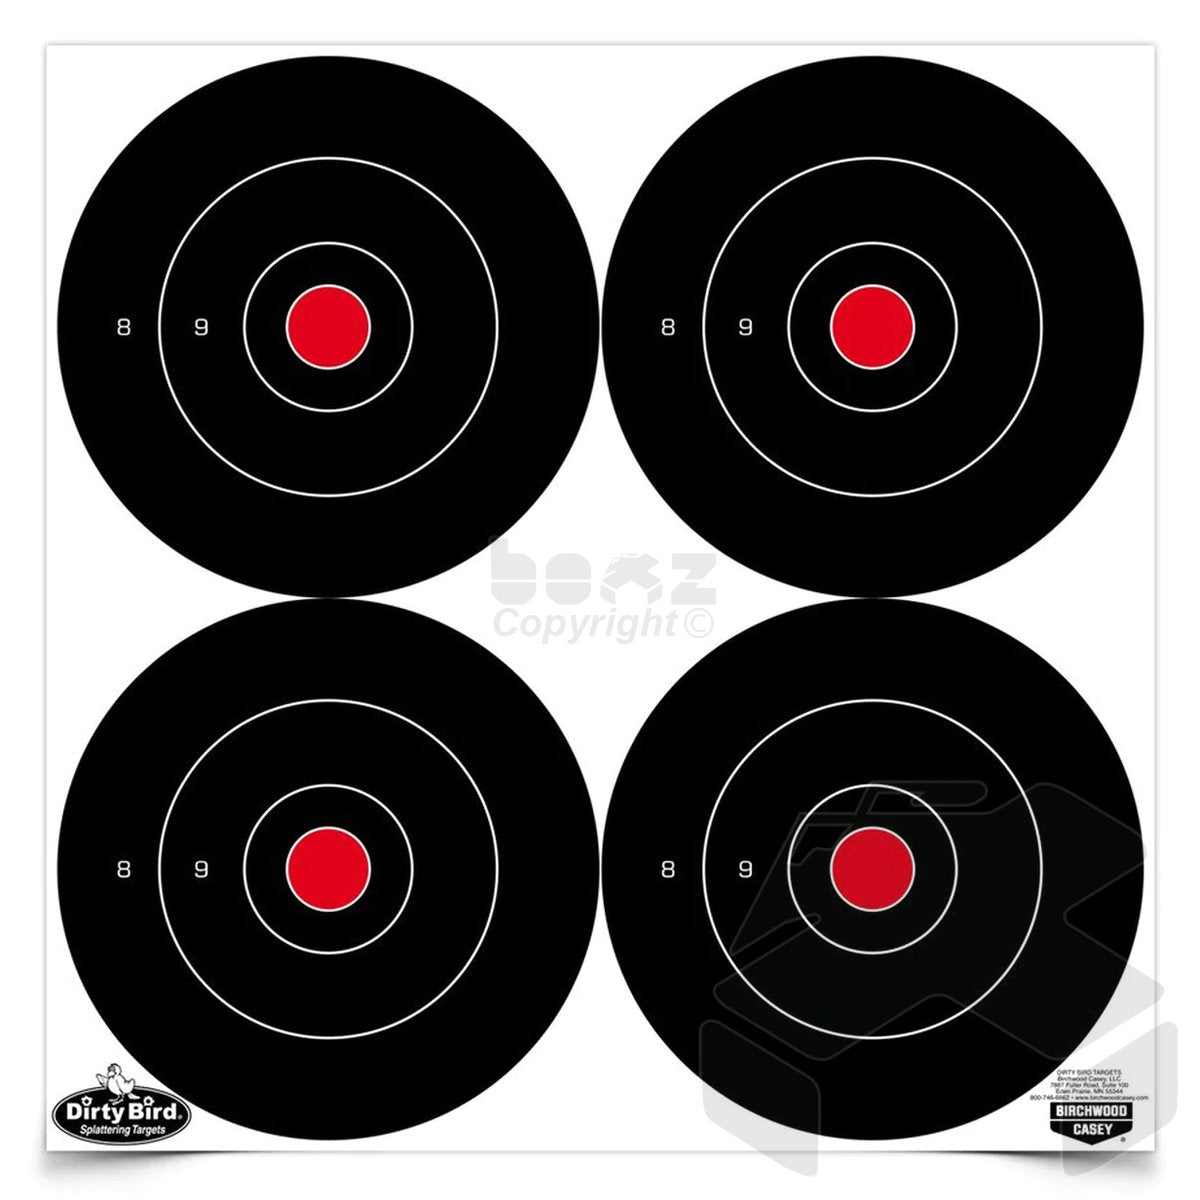 Birchwood Casey Dirty Bird Bulls-Eye Targets 6" - 48 Targets